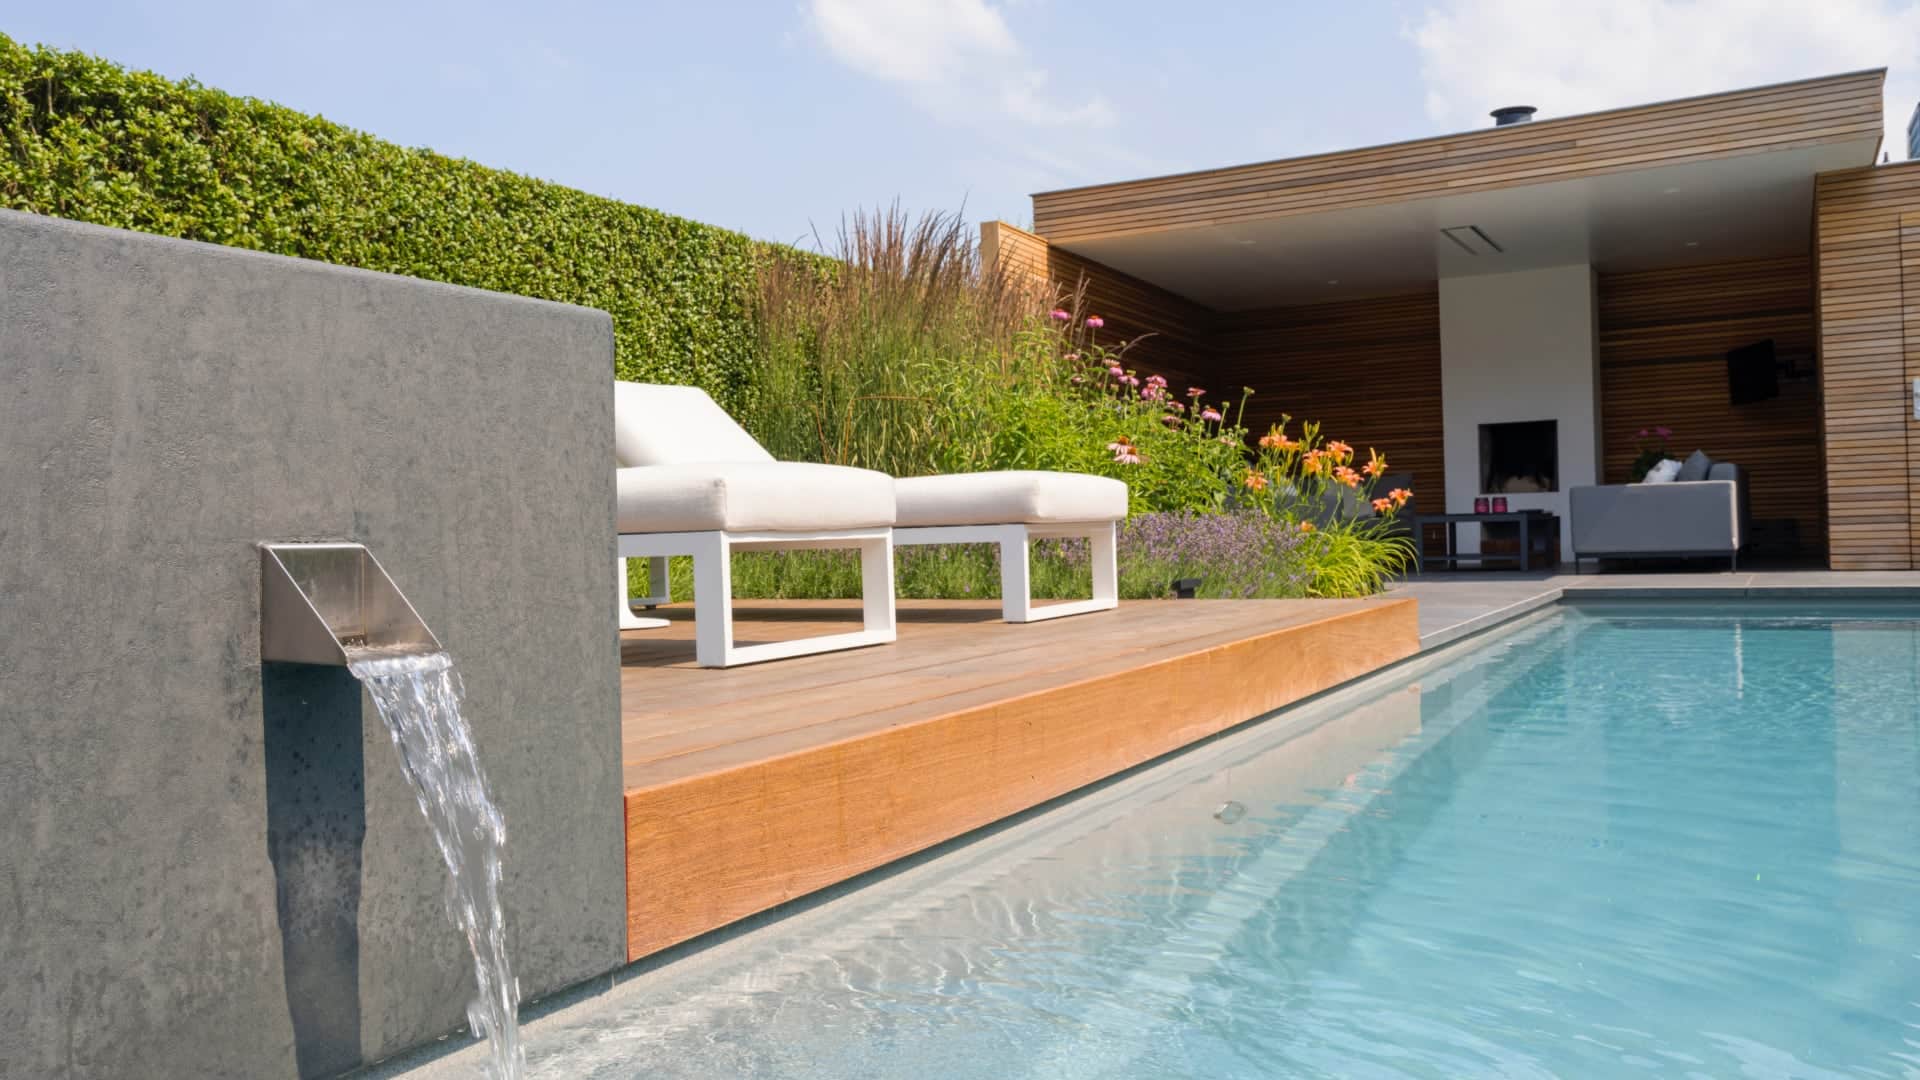 Moderne tuin met zwembad poolhouse en sauna